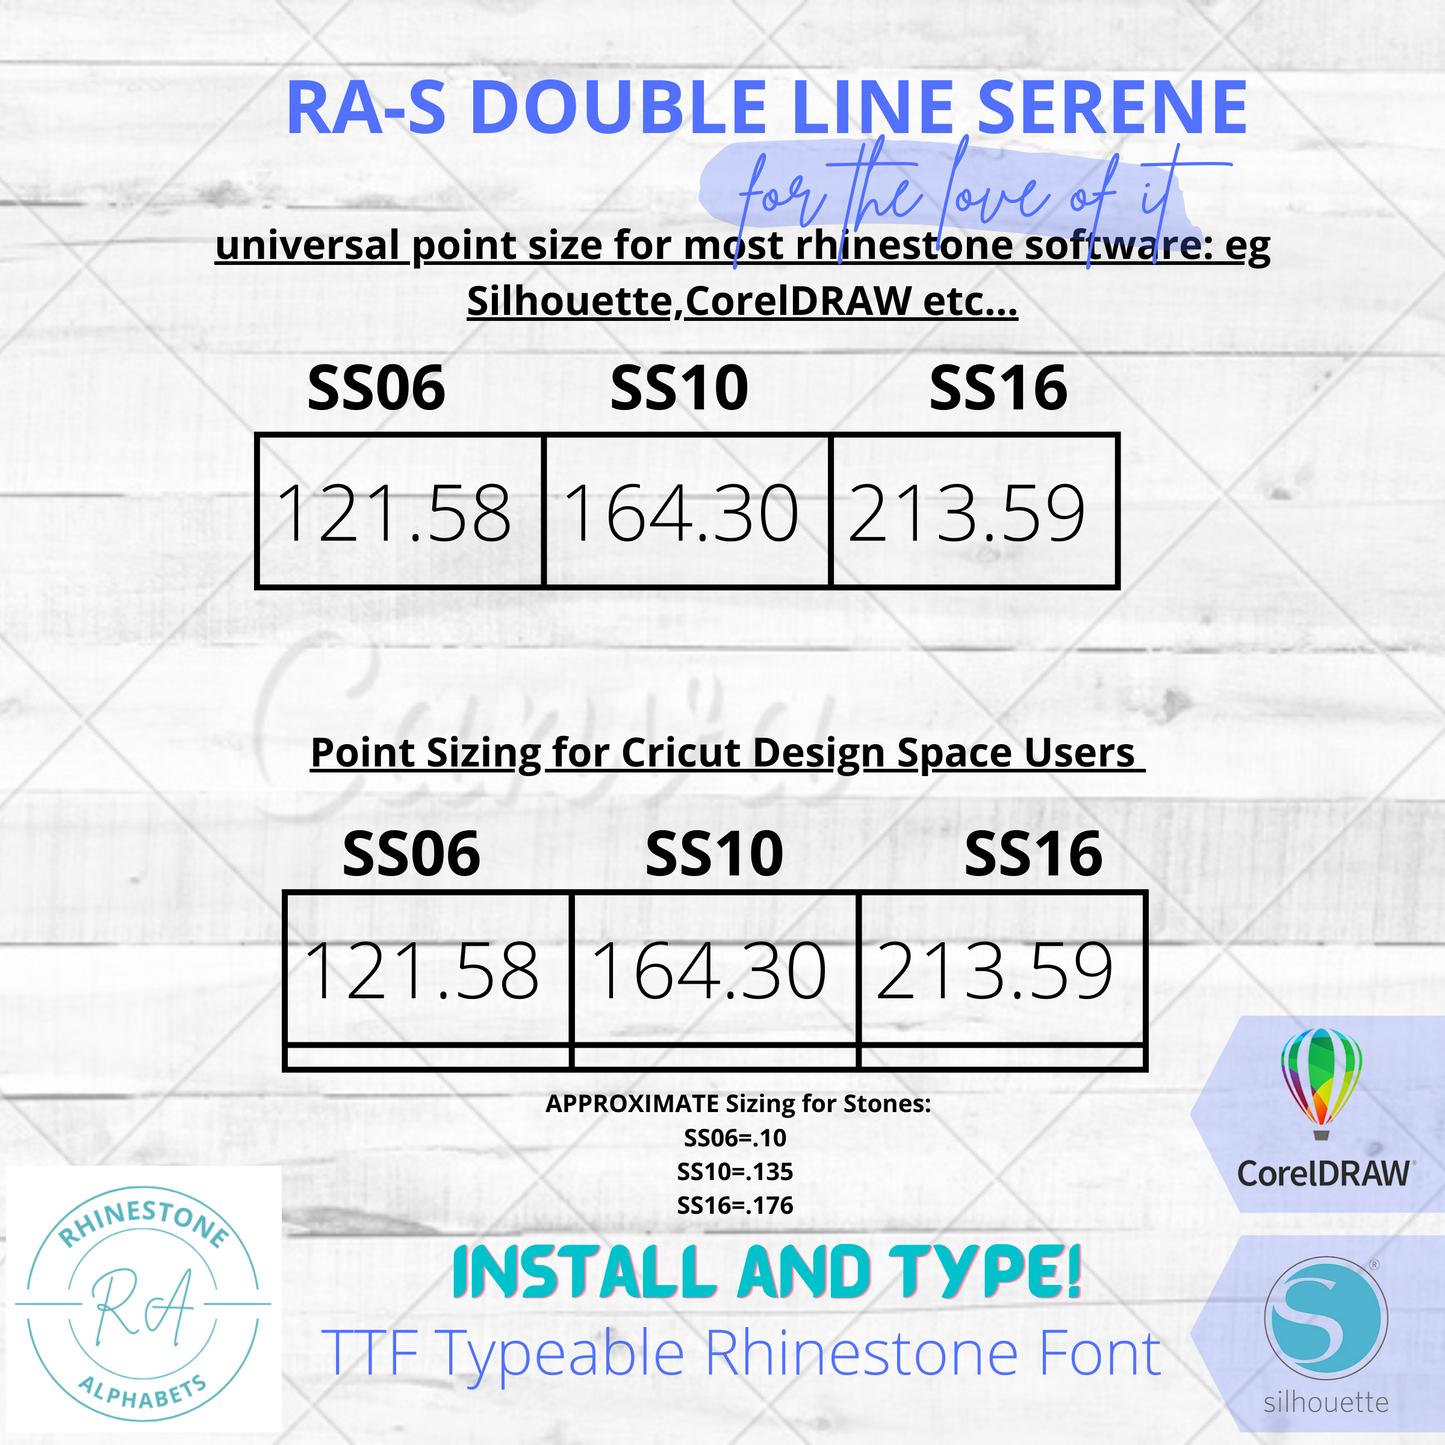 RA-S Doubleline Serene